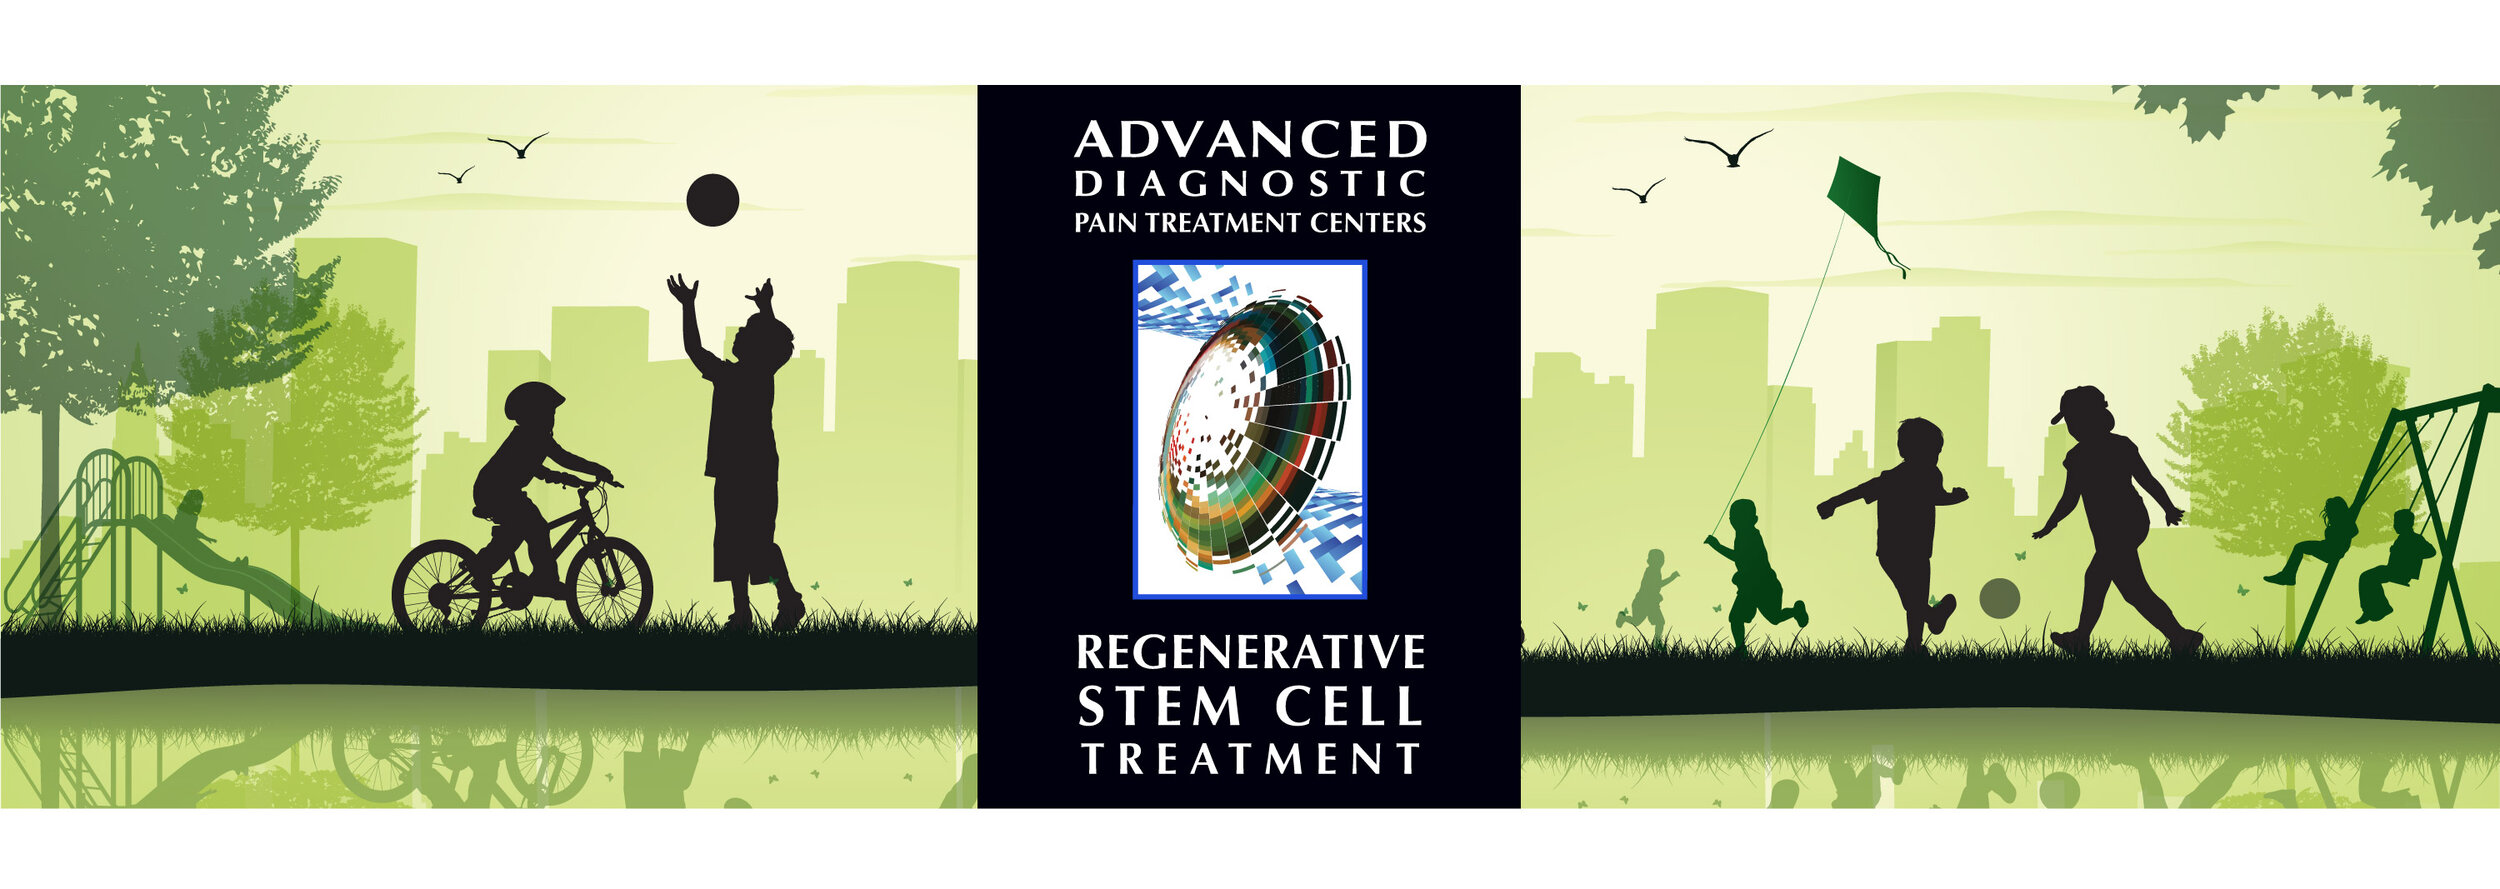 stem-cells-banner-3000w.jpg